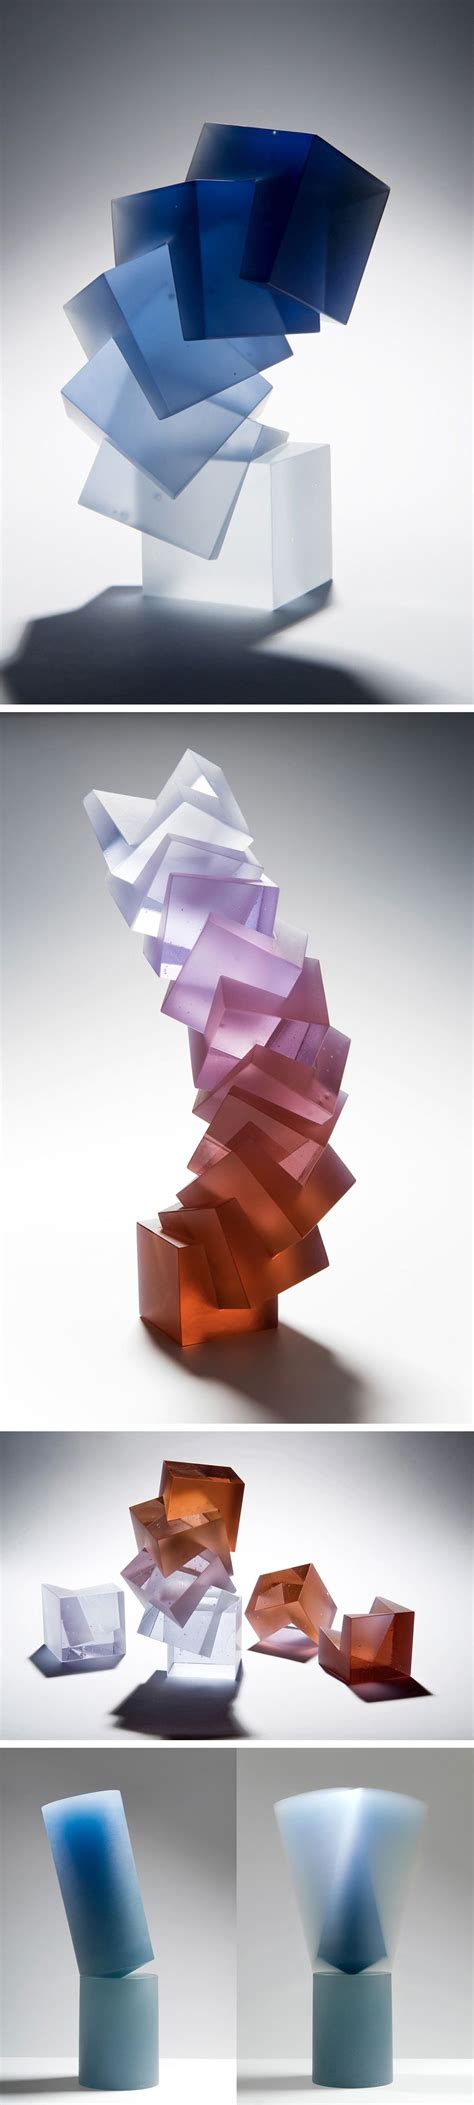 Kinetic Cast Glass Sculptures By Heike Brachlow — Colossal Glass Art